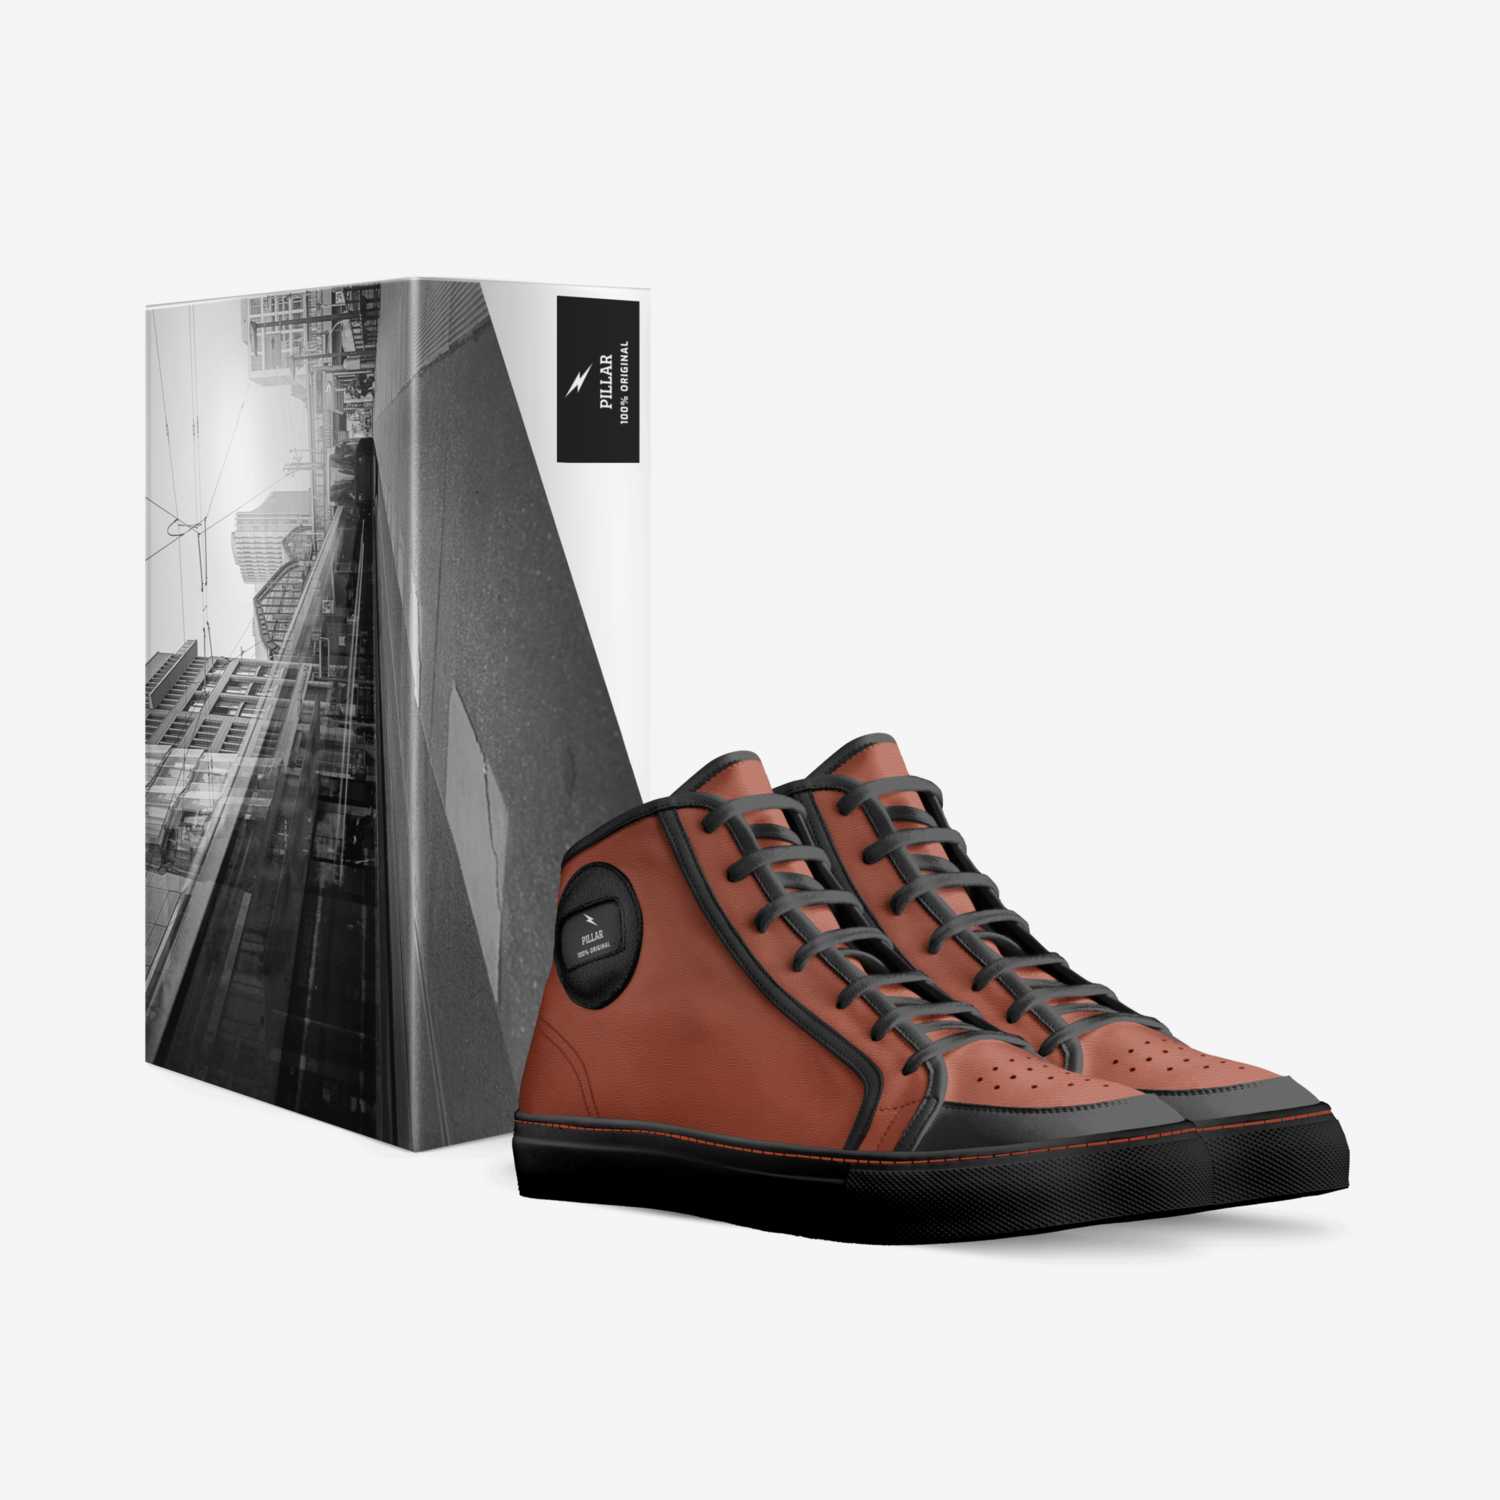 Pillar custom made in Italy shoes by Joseph Pillar | Box view